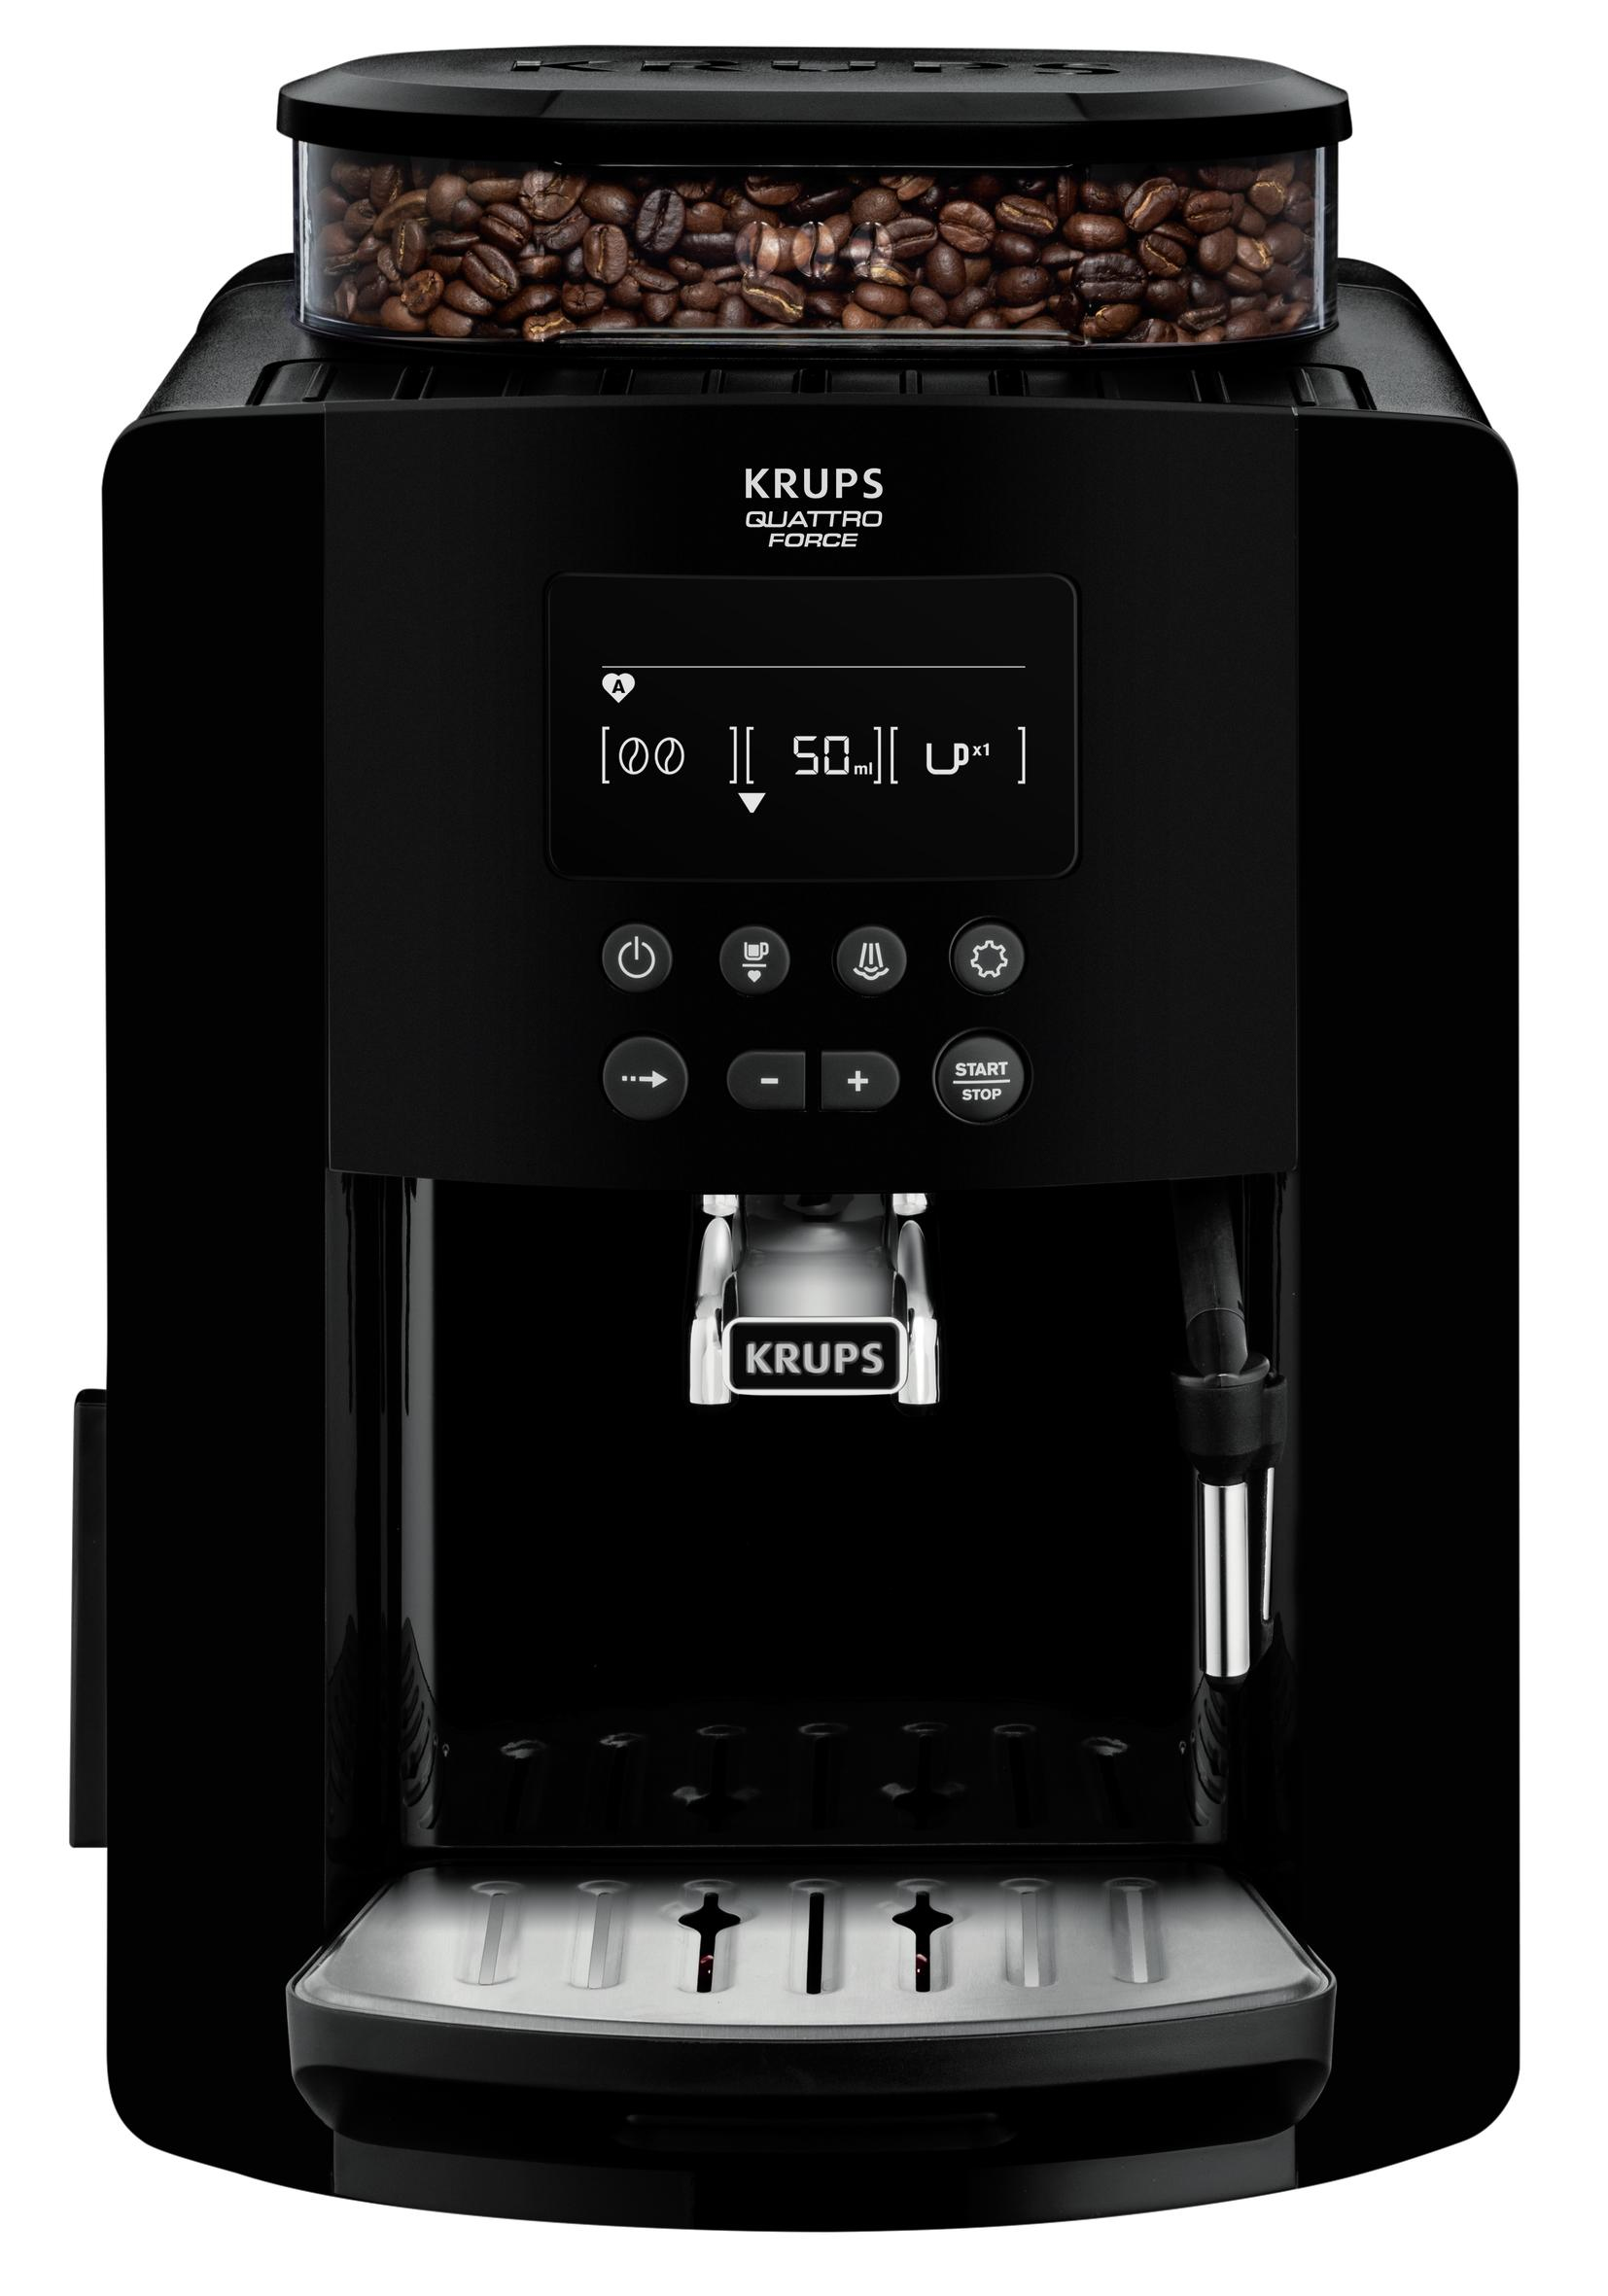 Krups Arabica EA8170 coffee maker